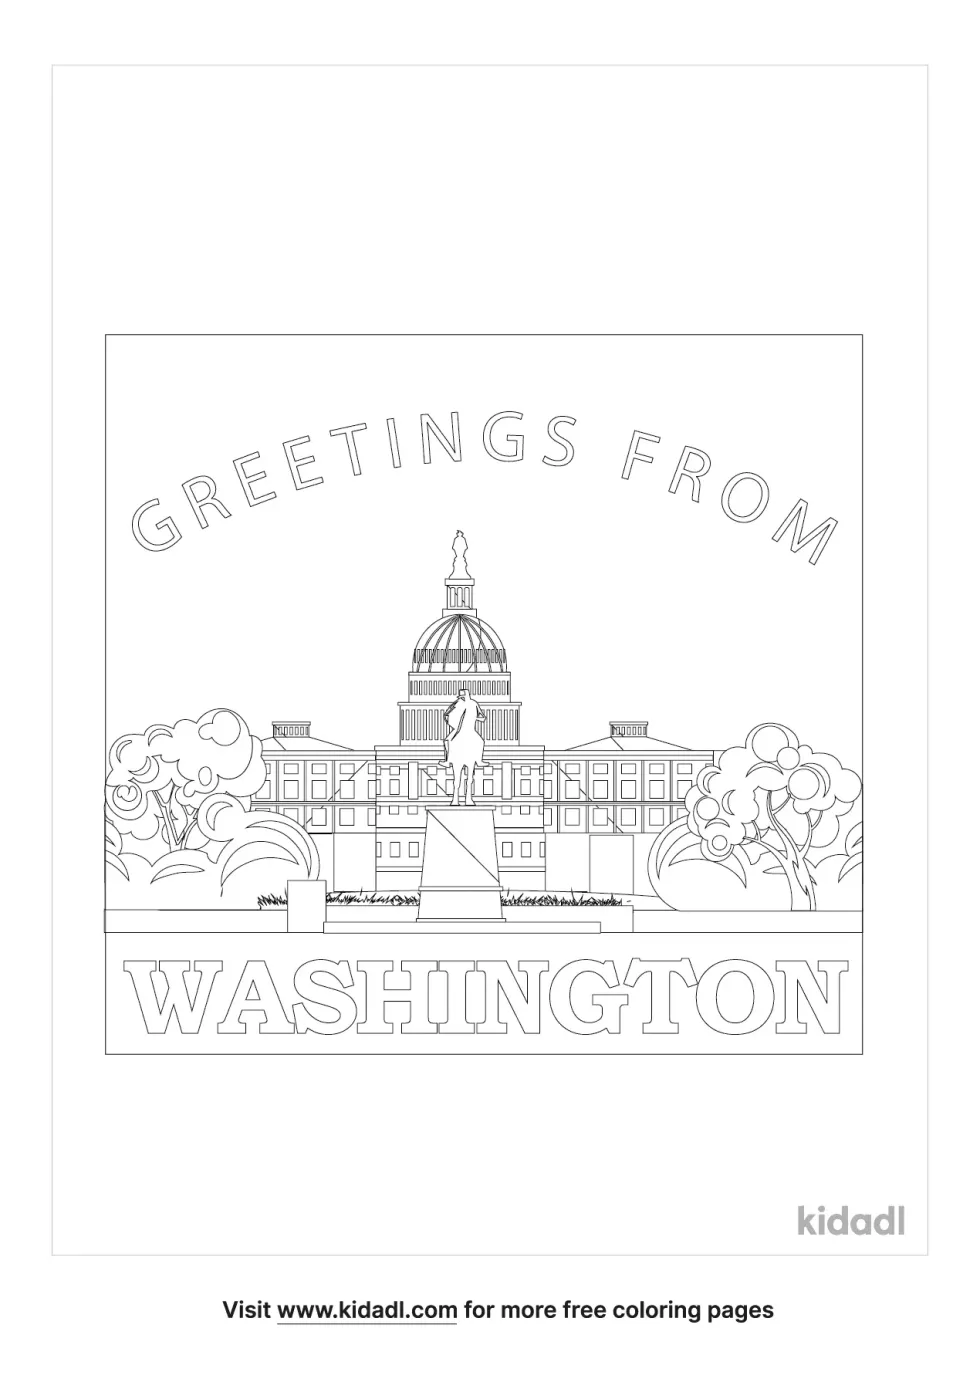 Greetings From Washington